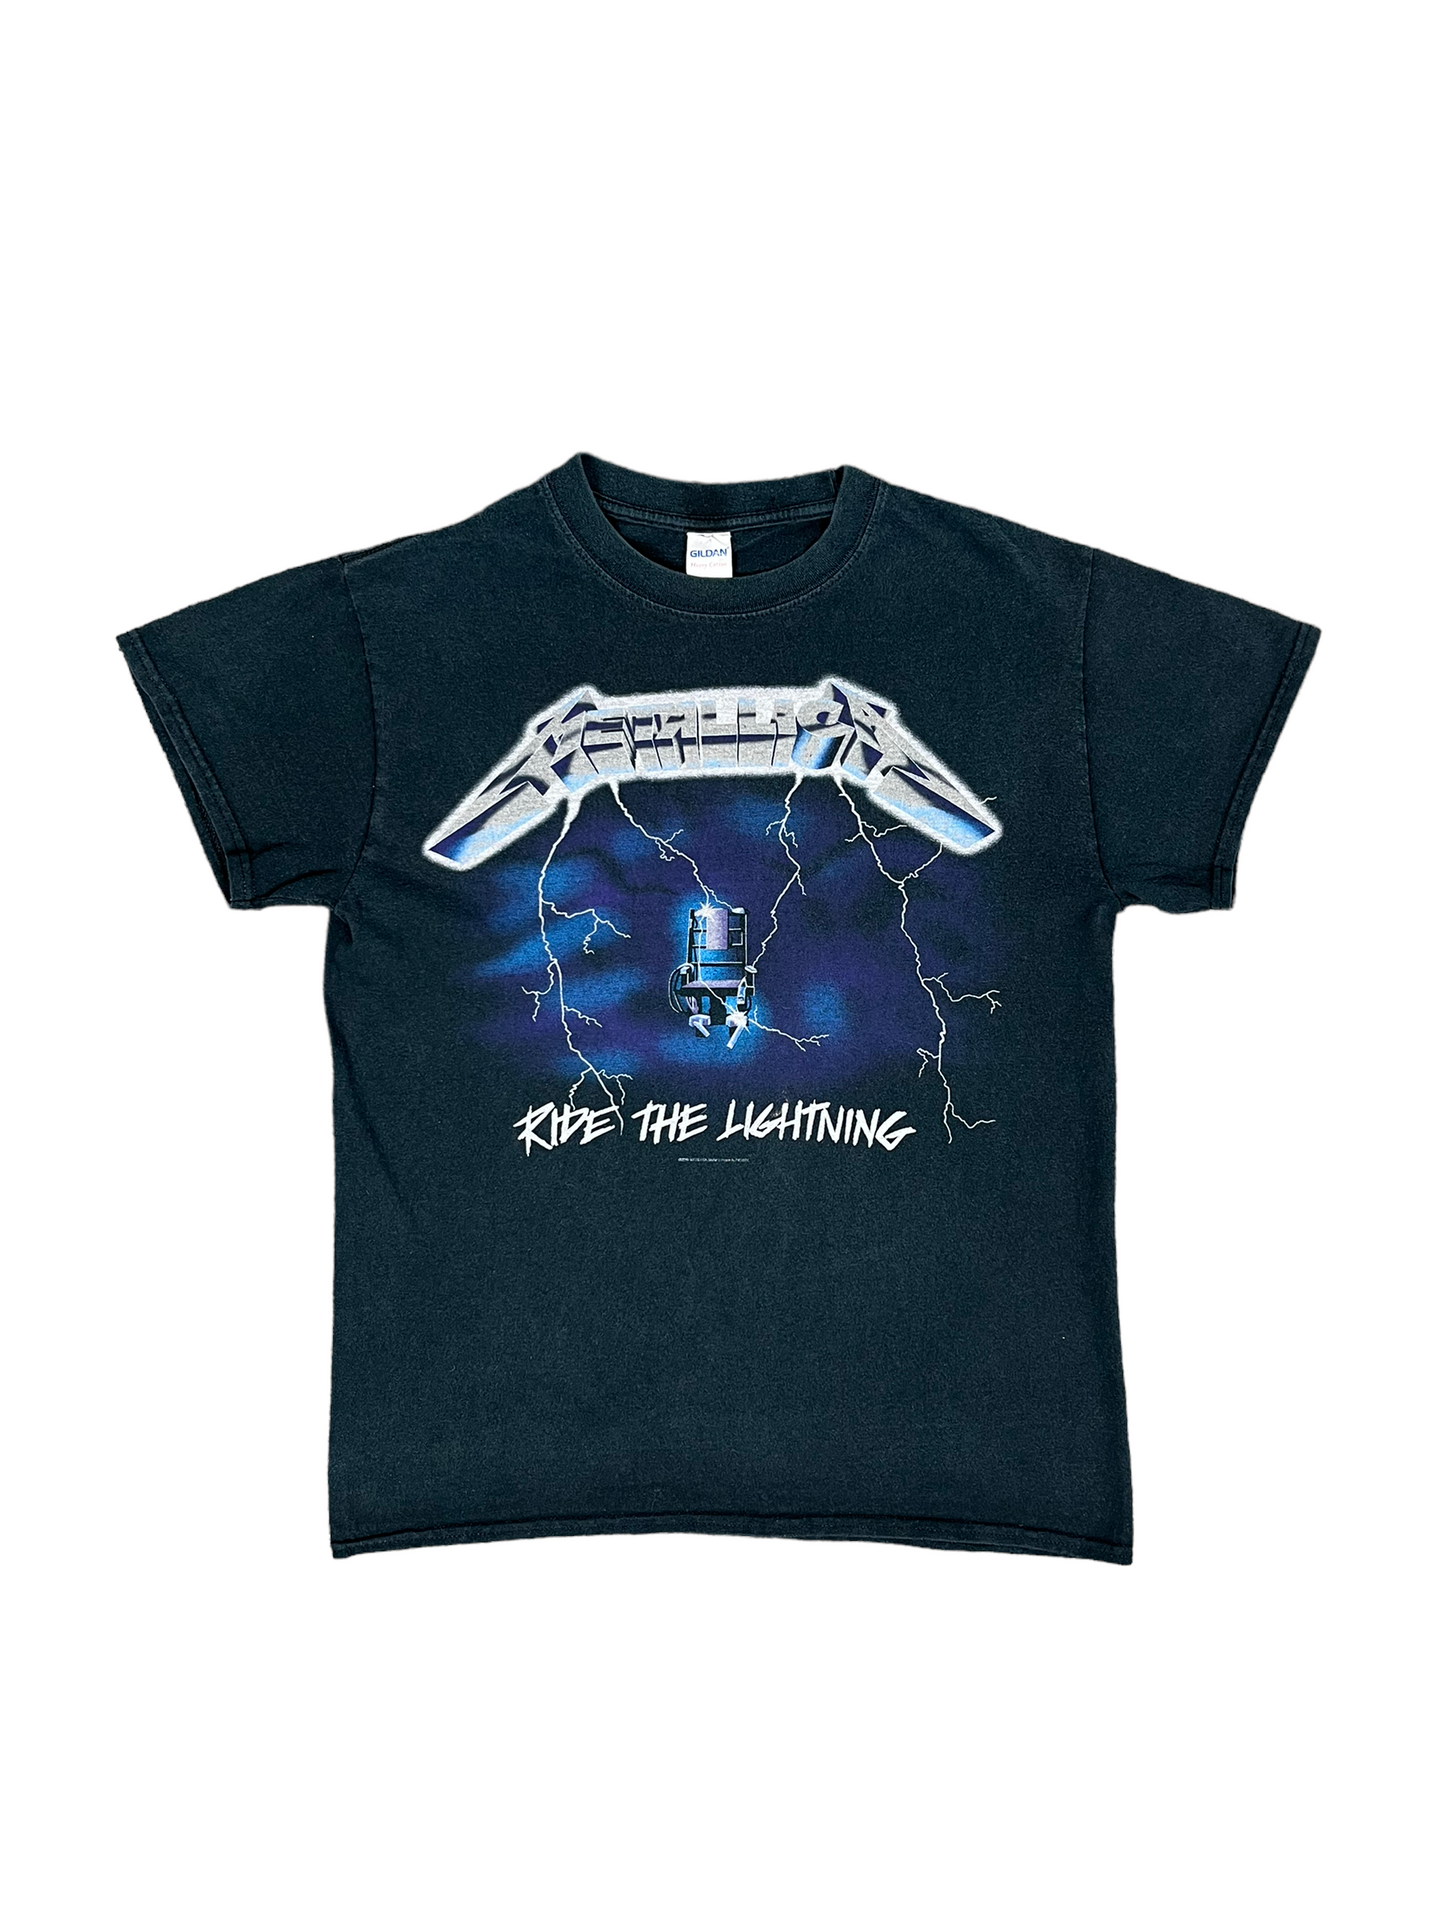 Metallica Ride The Lightning T Shirt Black - Small